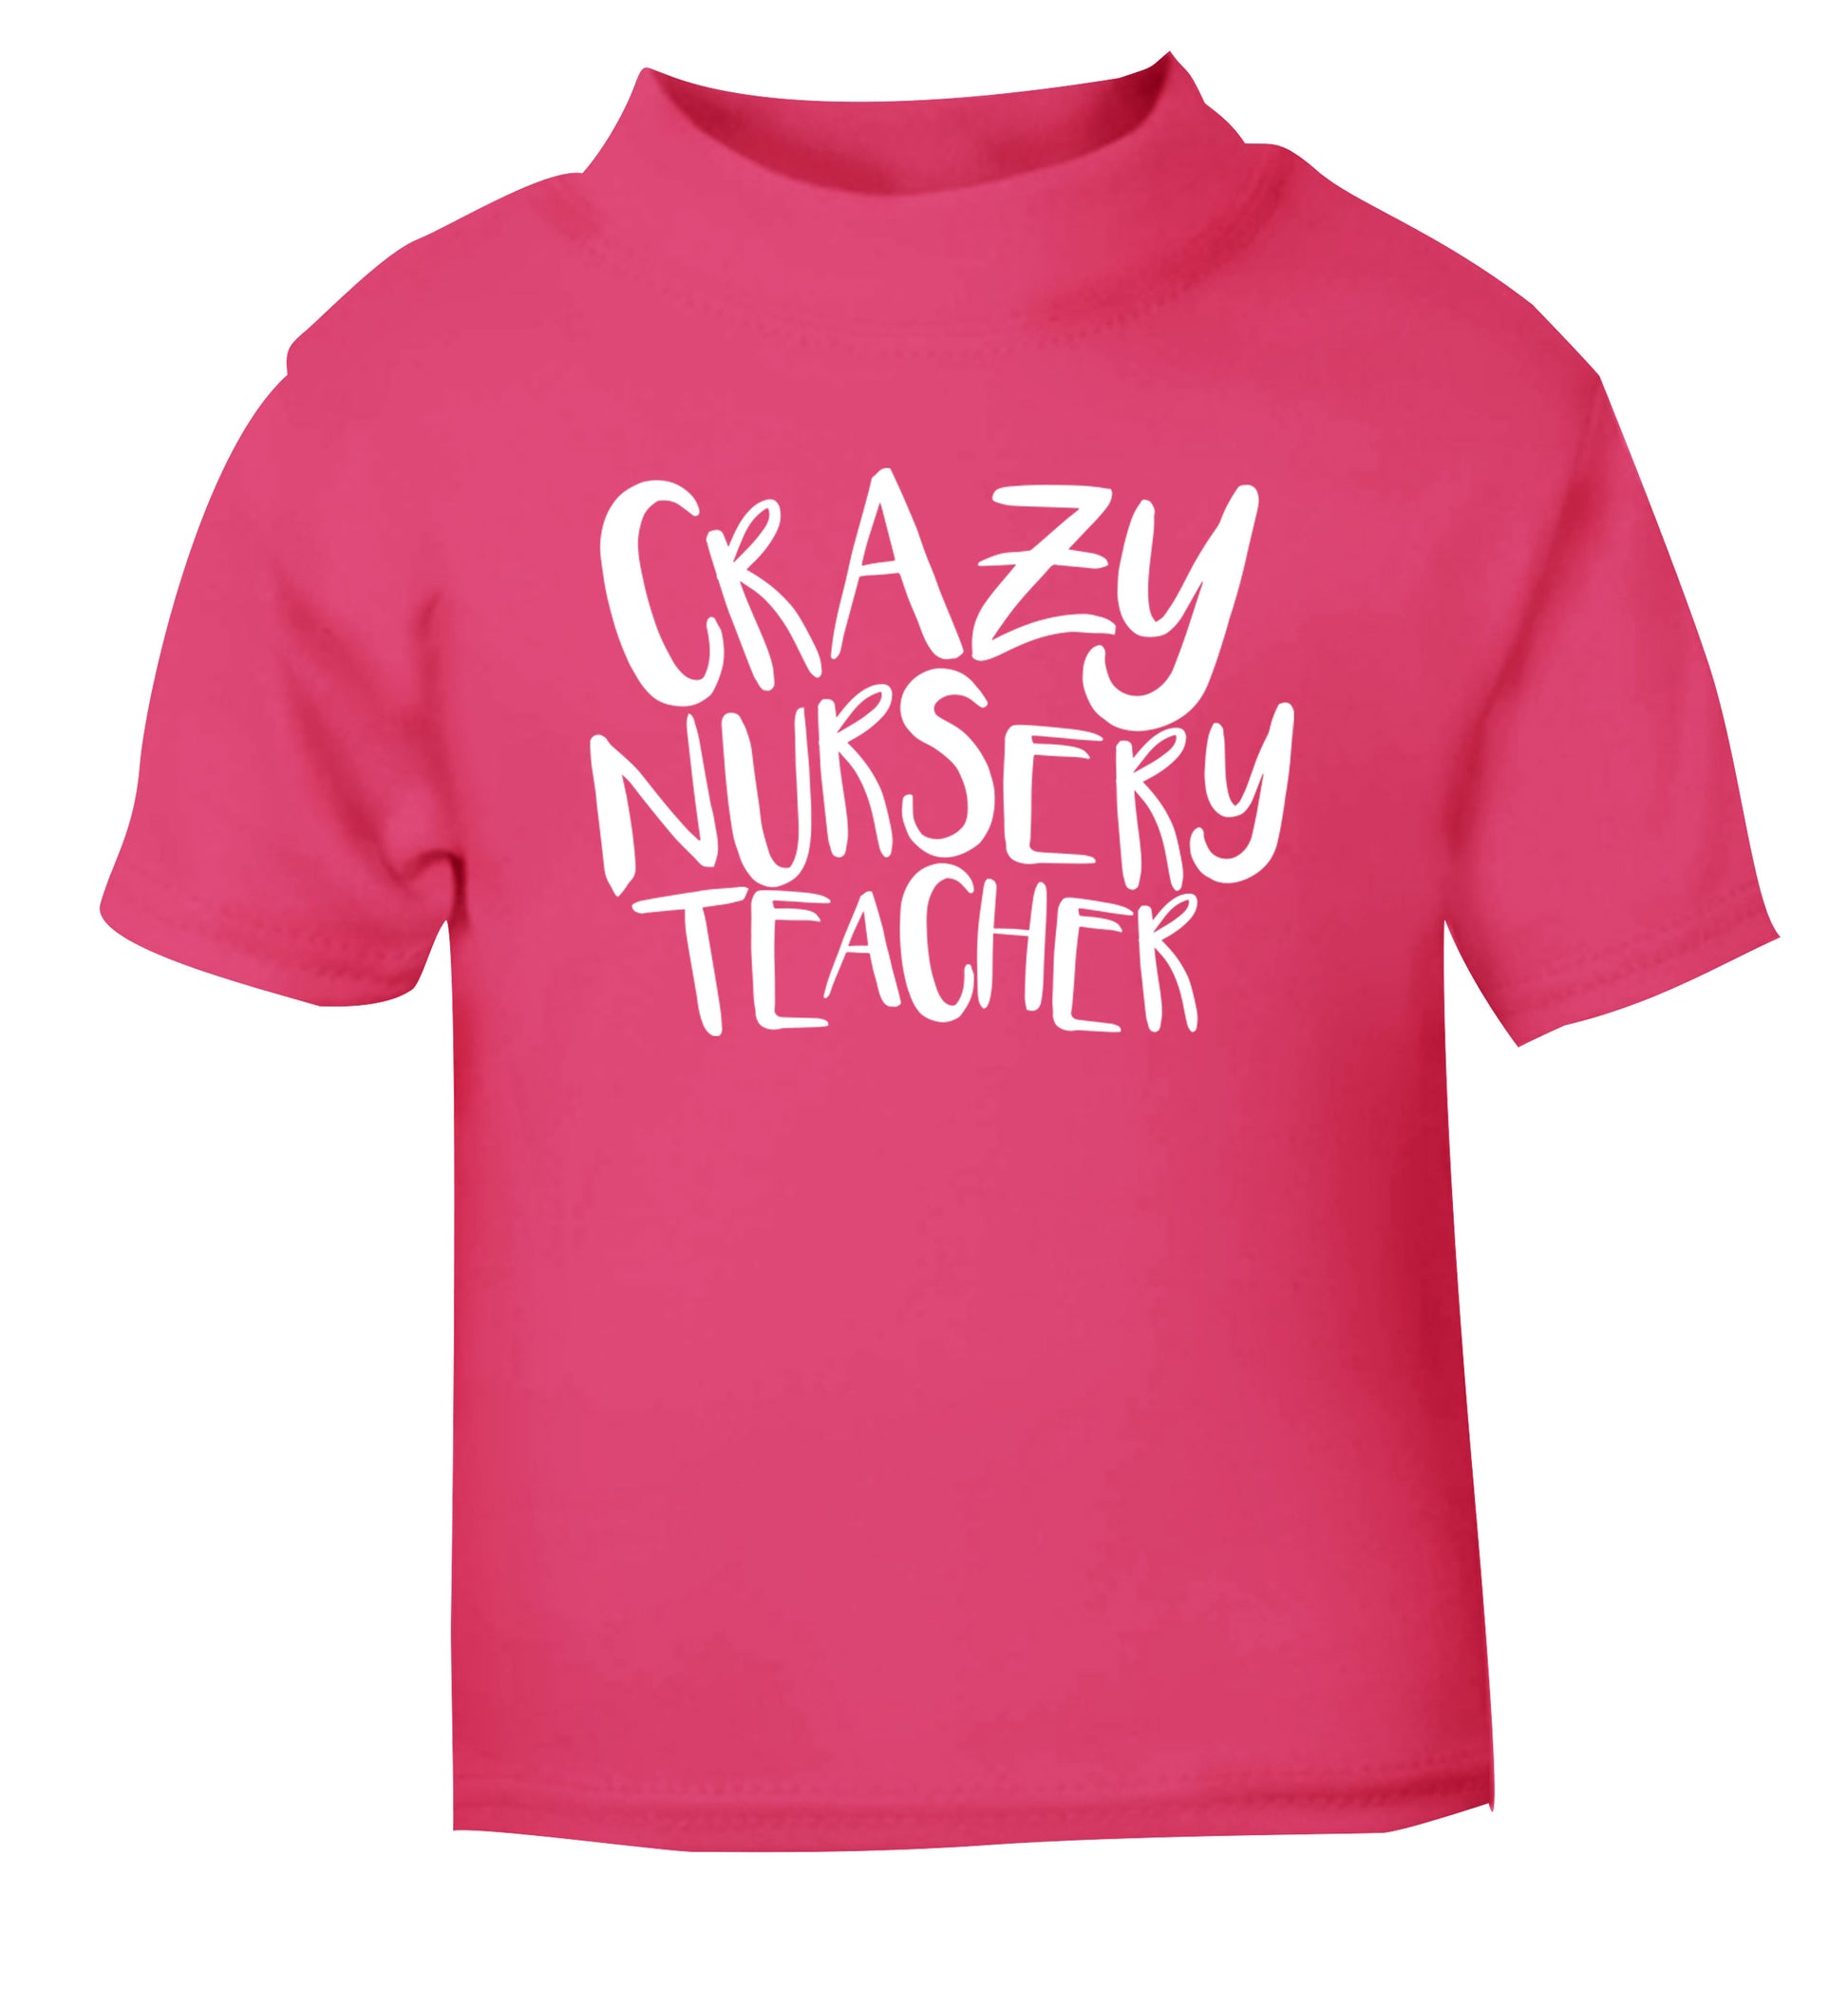 Crazy nursery teacher pink Baby Toddler Tshirt 2 Years